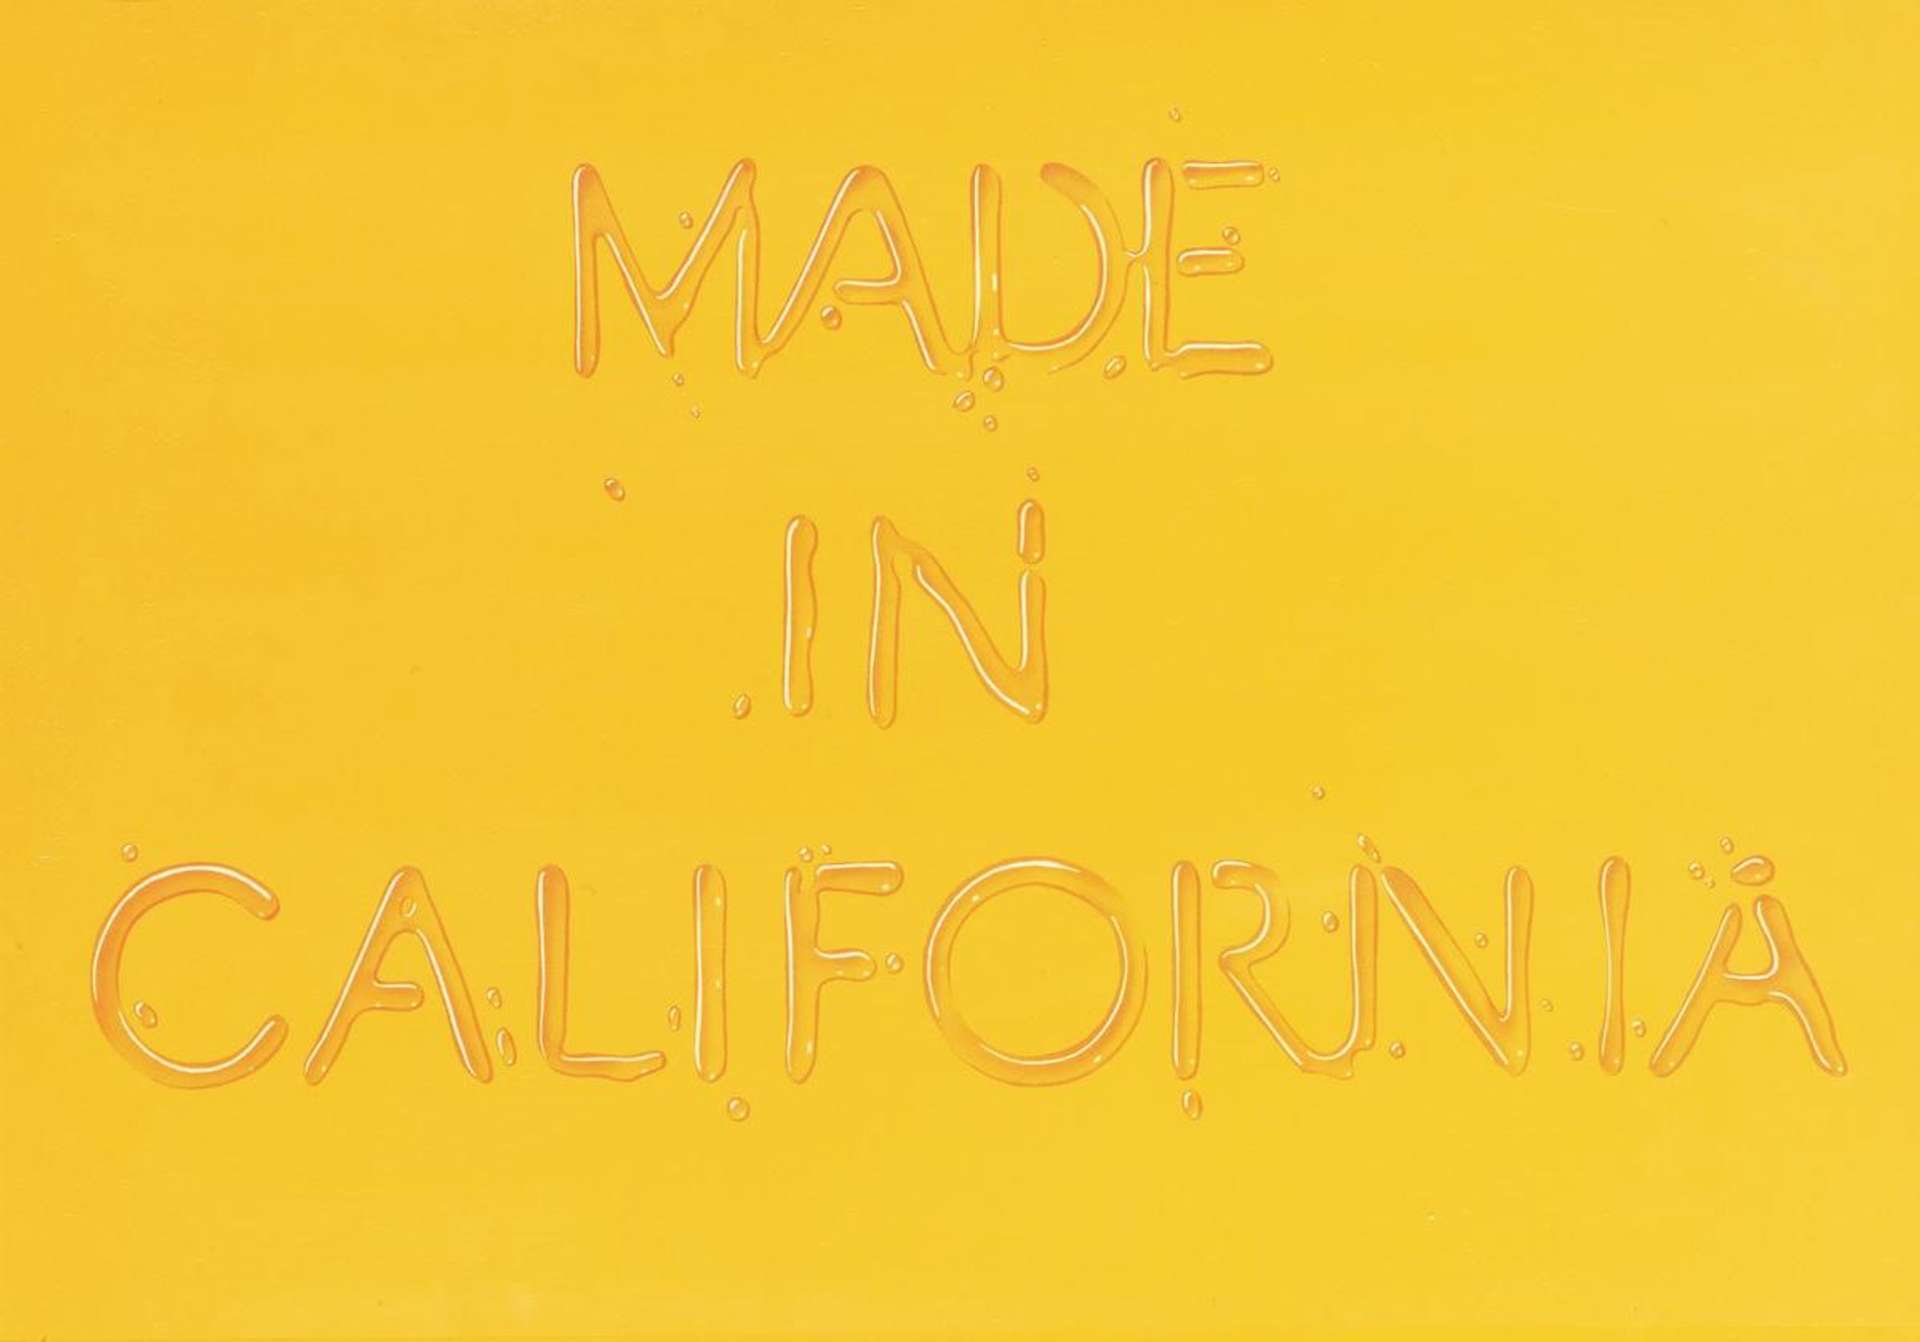 Ed Ruscha: Made In California - Signed Print